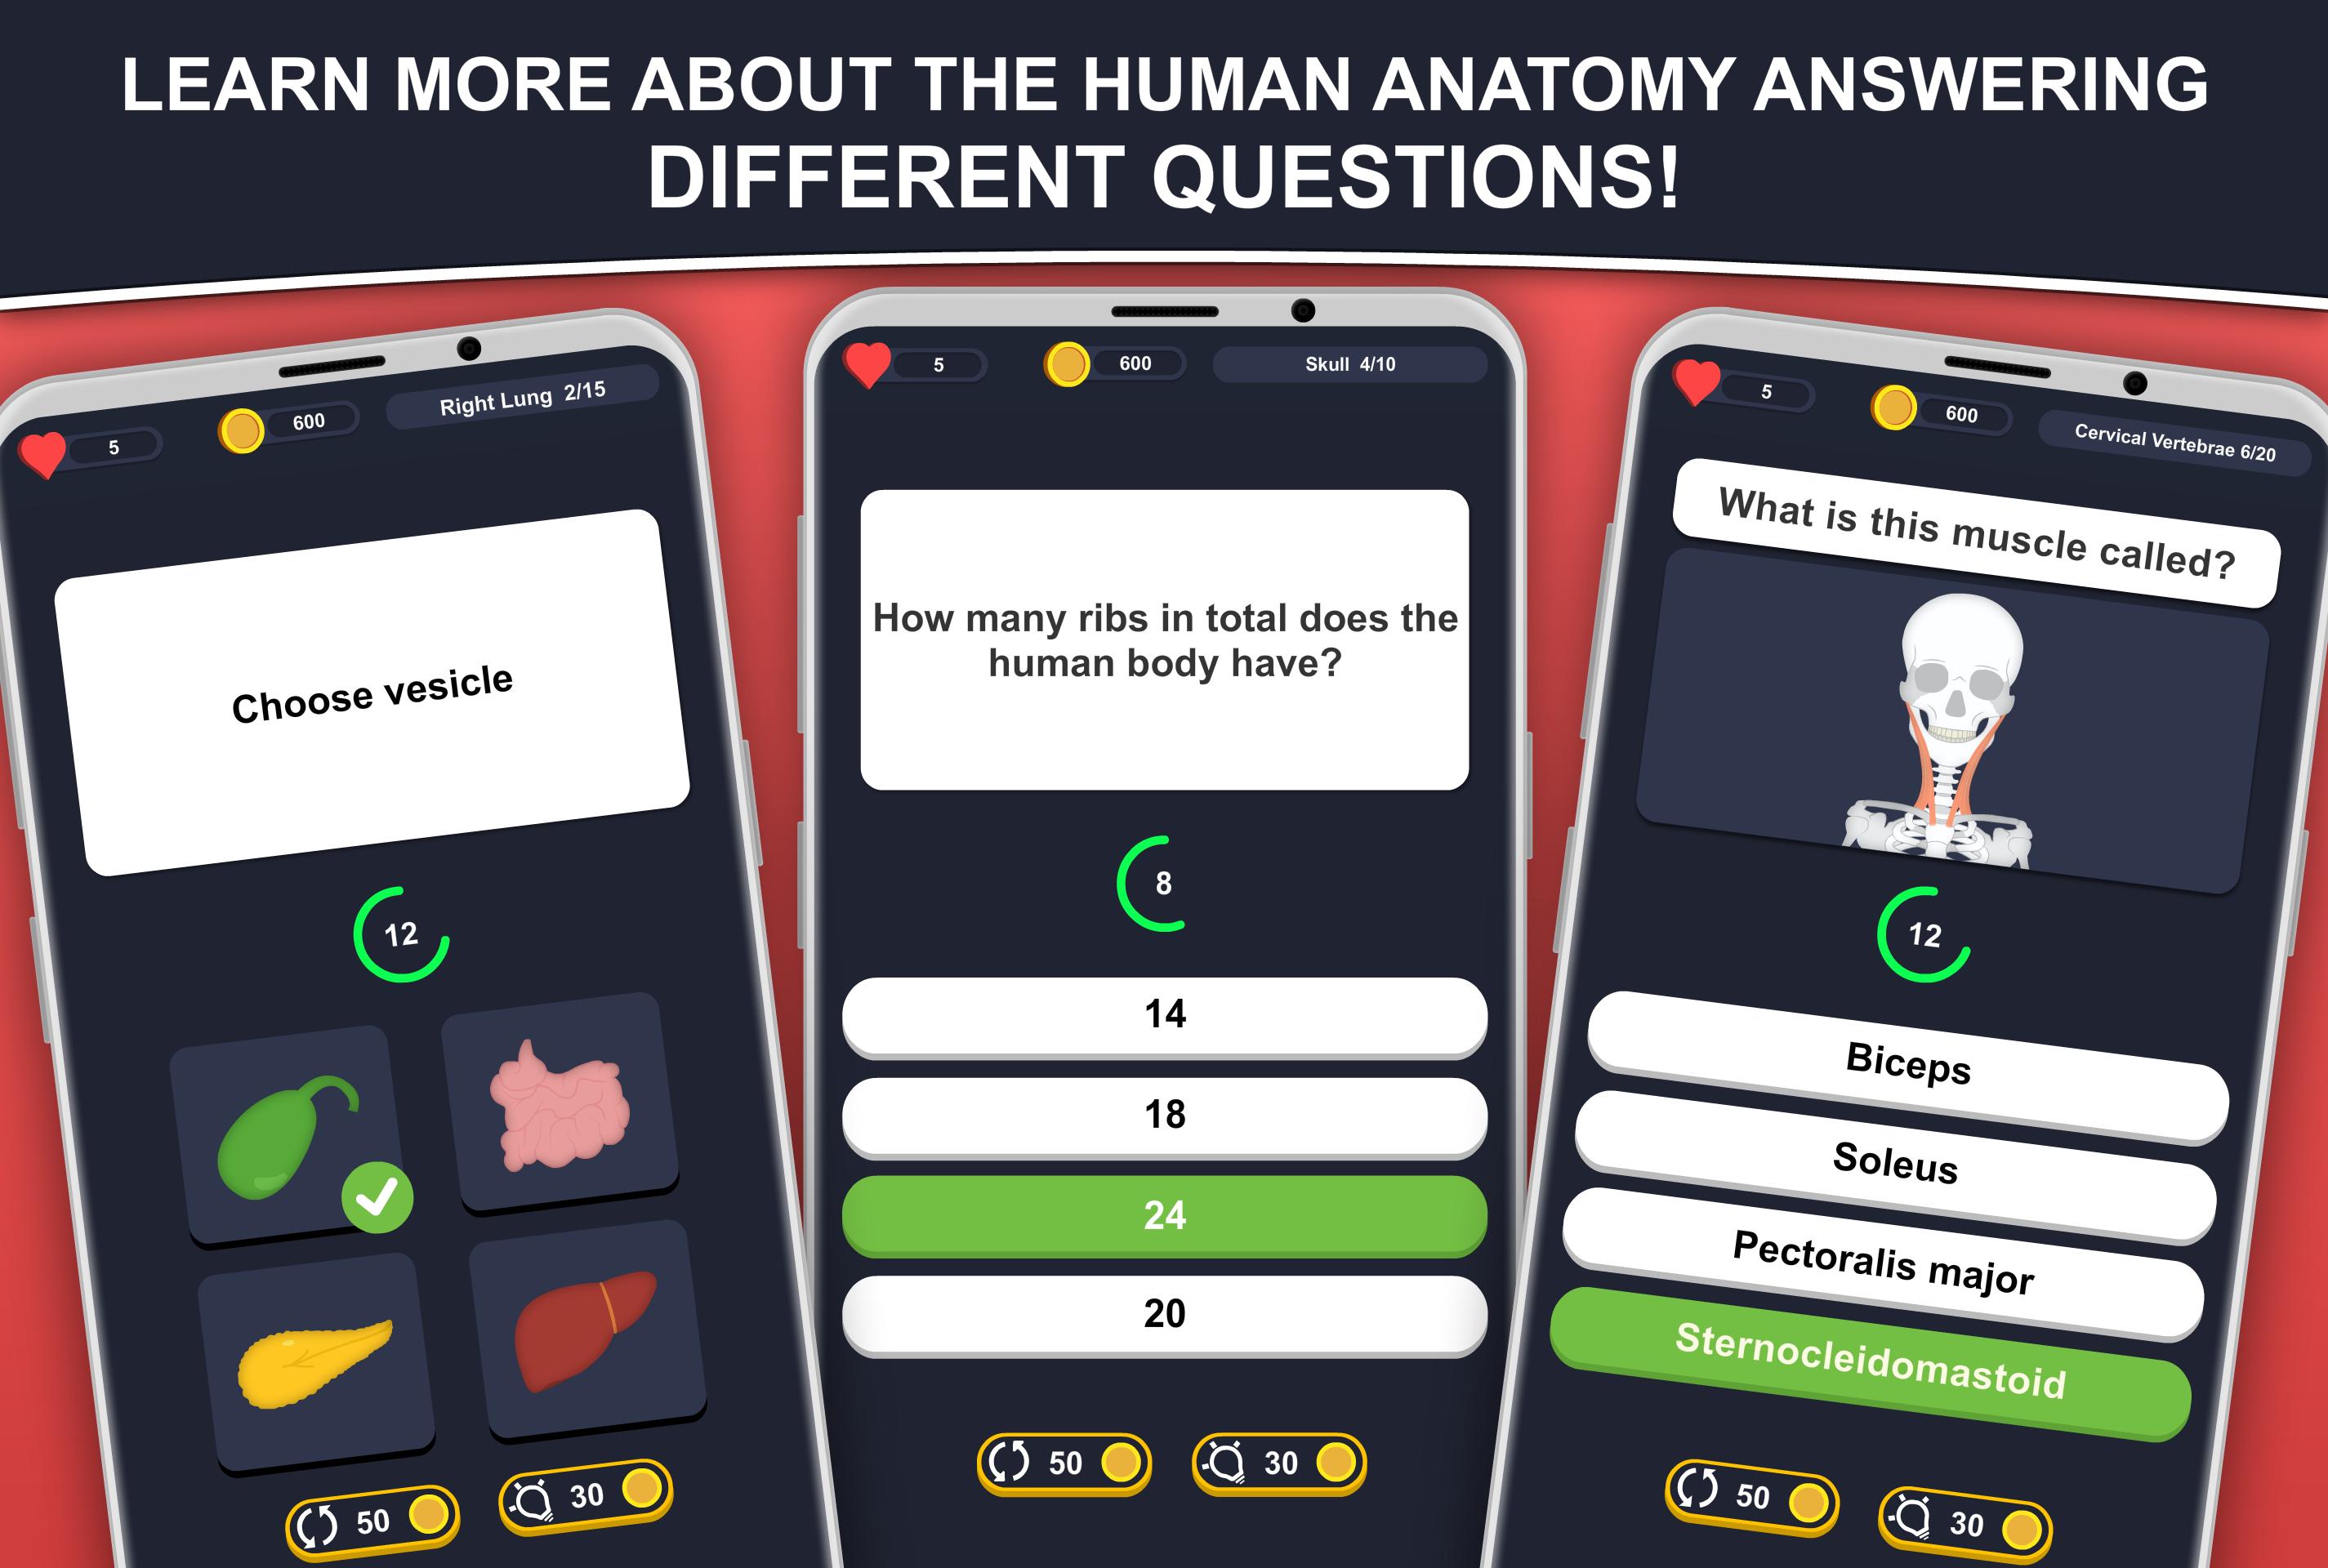 Anato Trivia Quiz on Human Anatomy 3.1.0 Screenshot 1